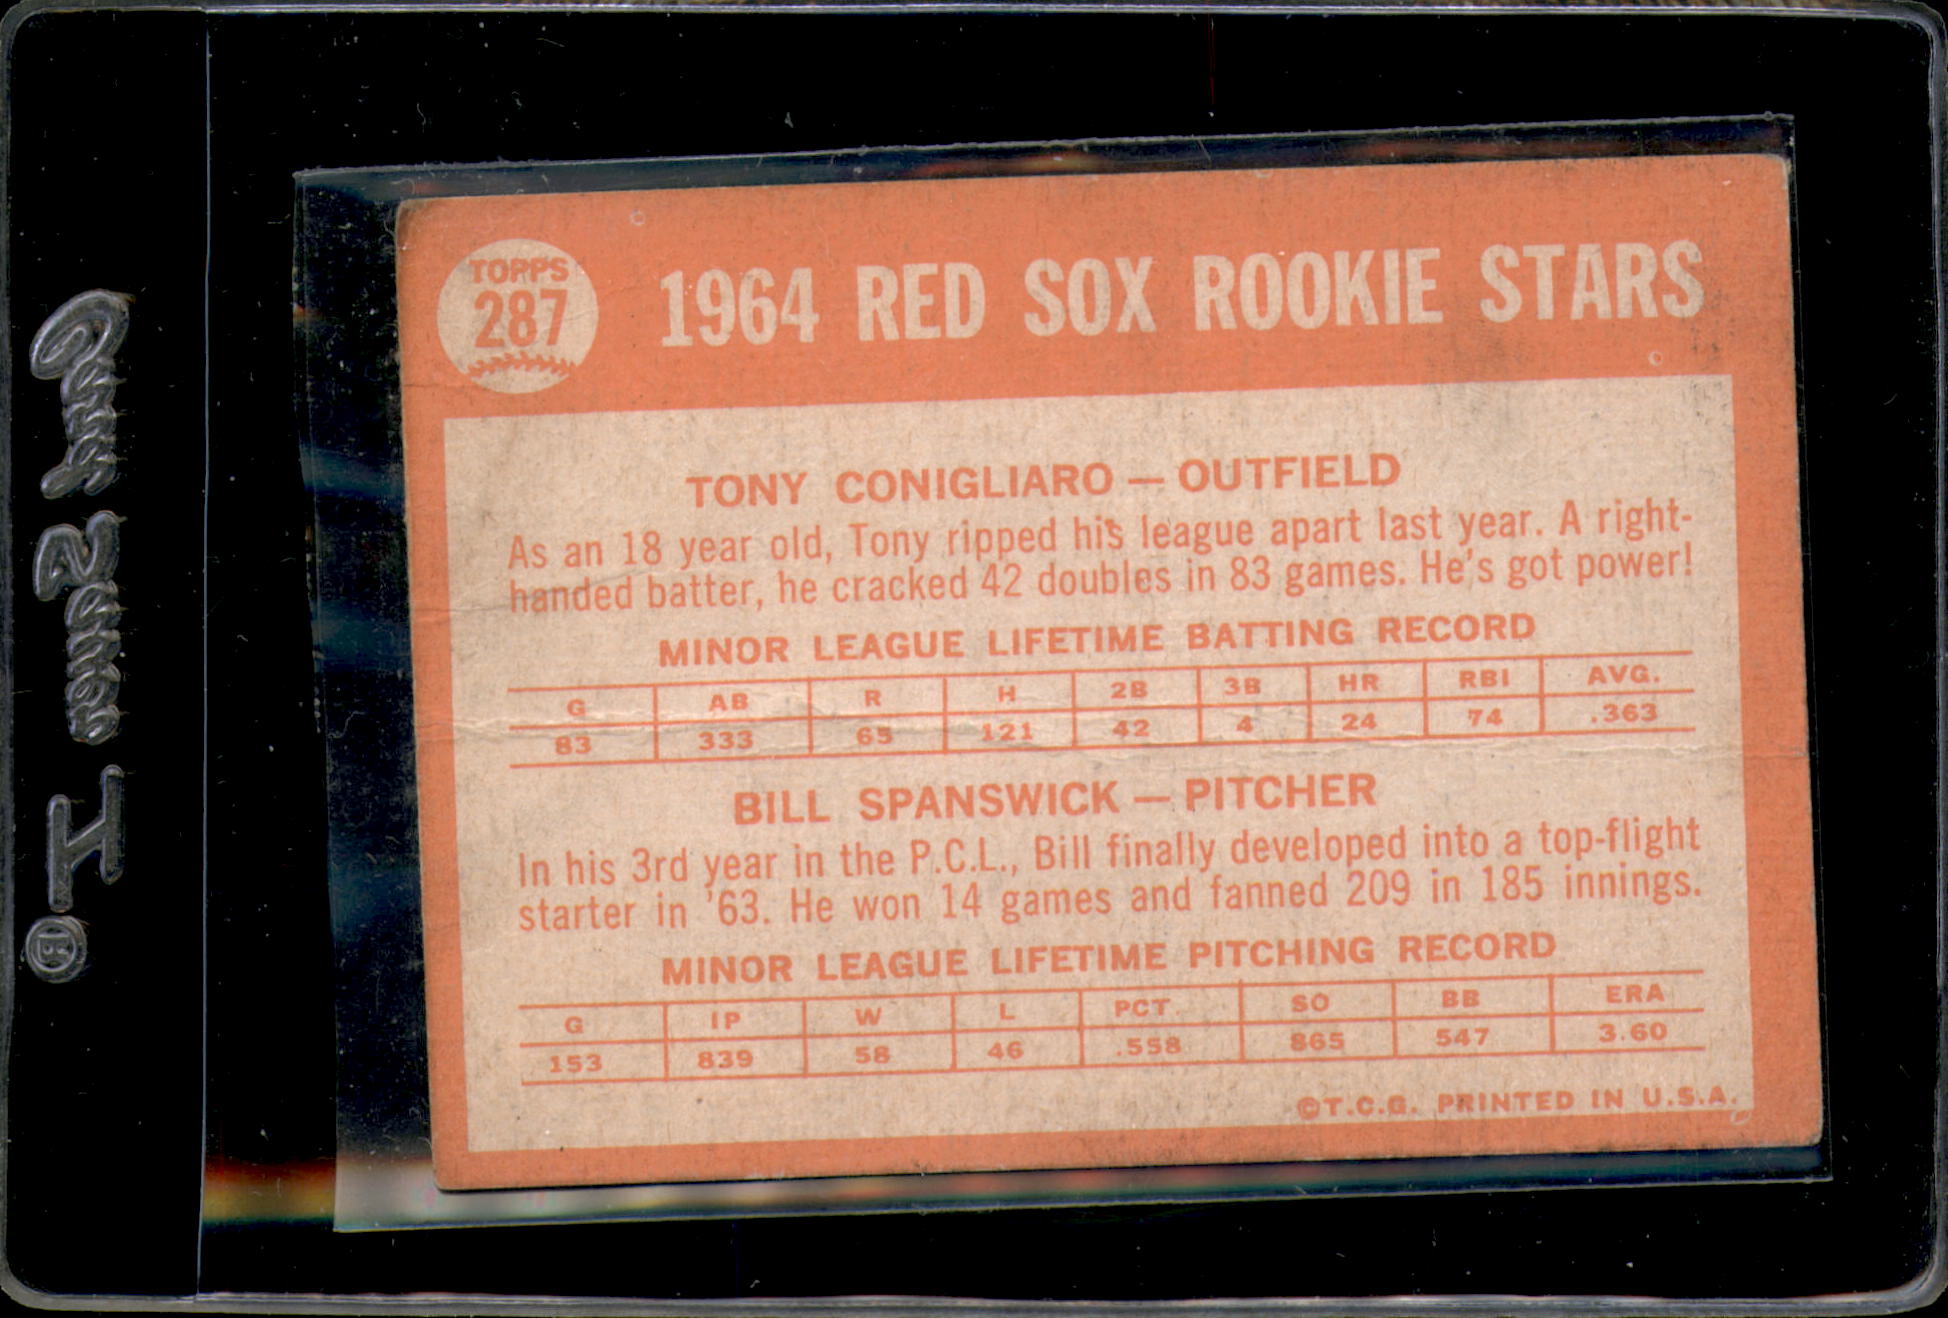 1964 Topps #287 Rookie Stars/Tony Conigliaro RC/Bill Spanswick RC back image